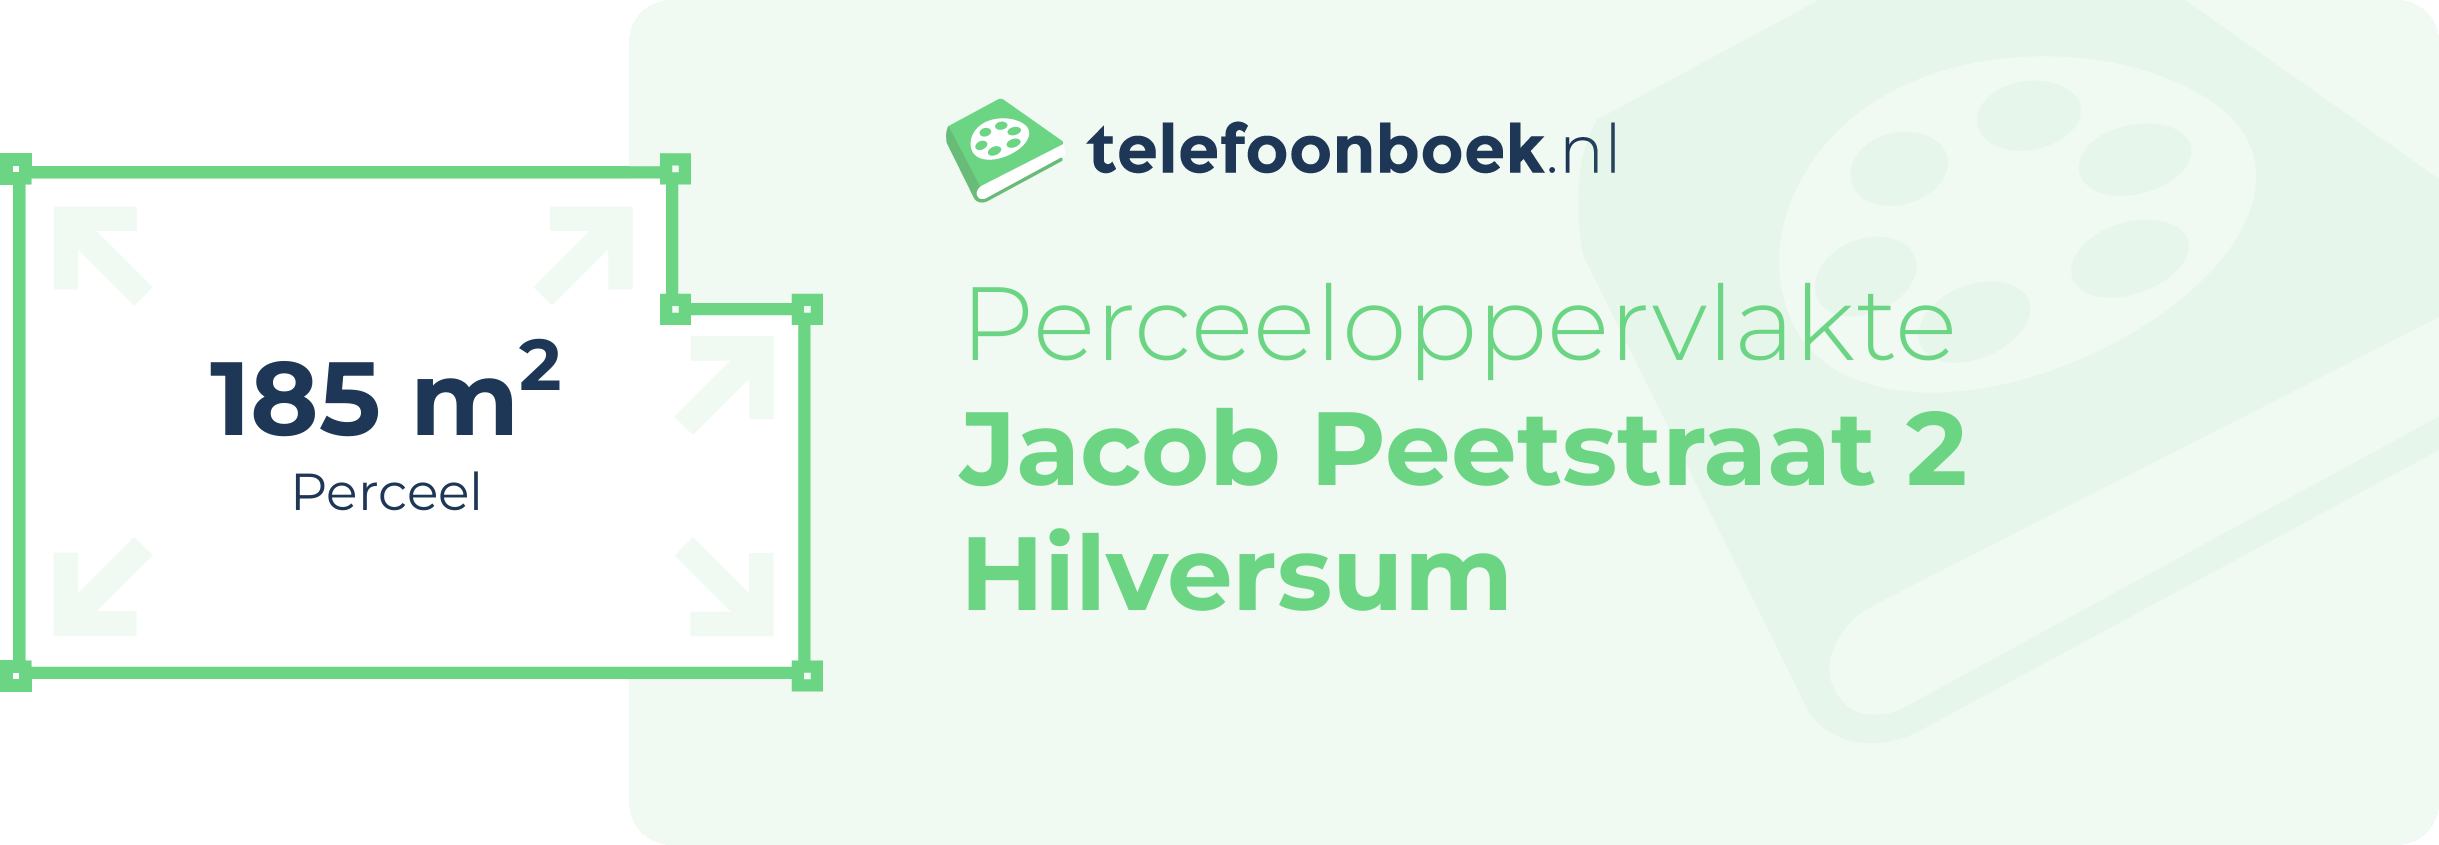 Perceeloppervlakte Jacob Peetstraat 2 Hilversum